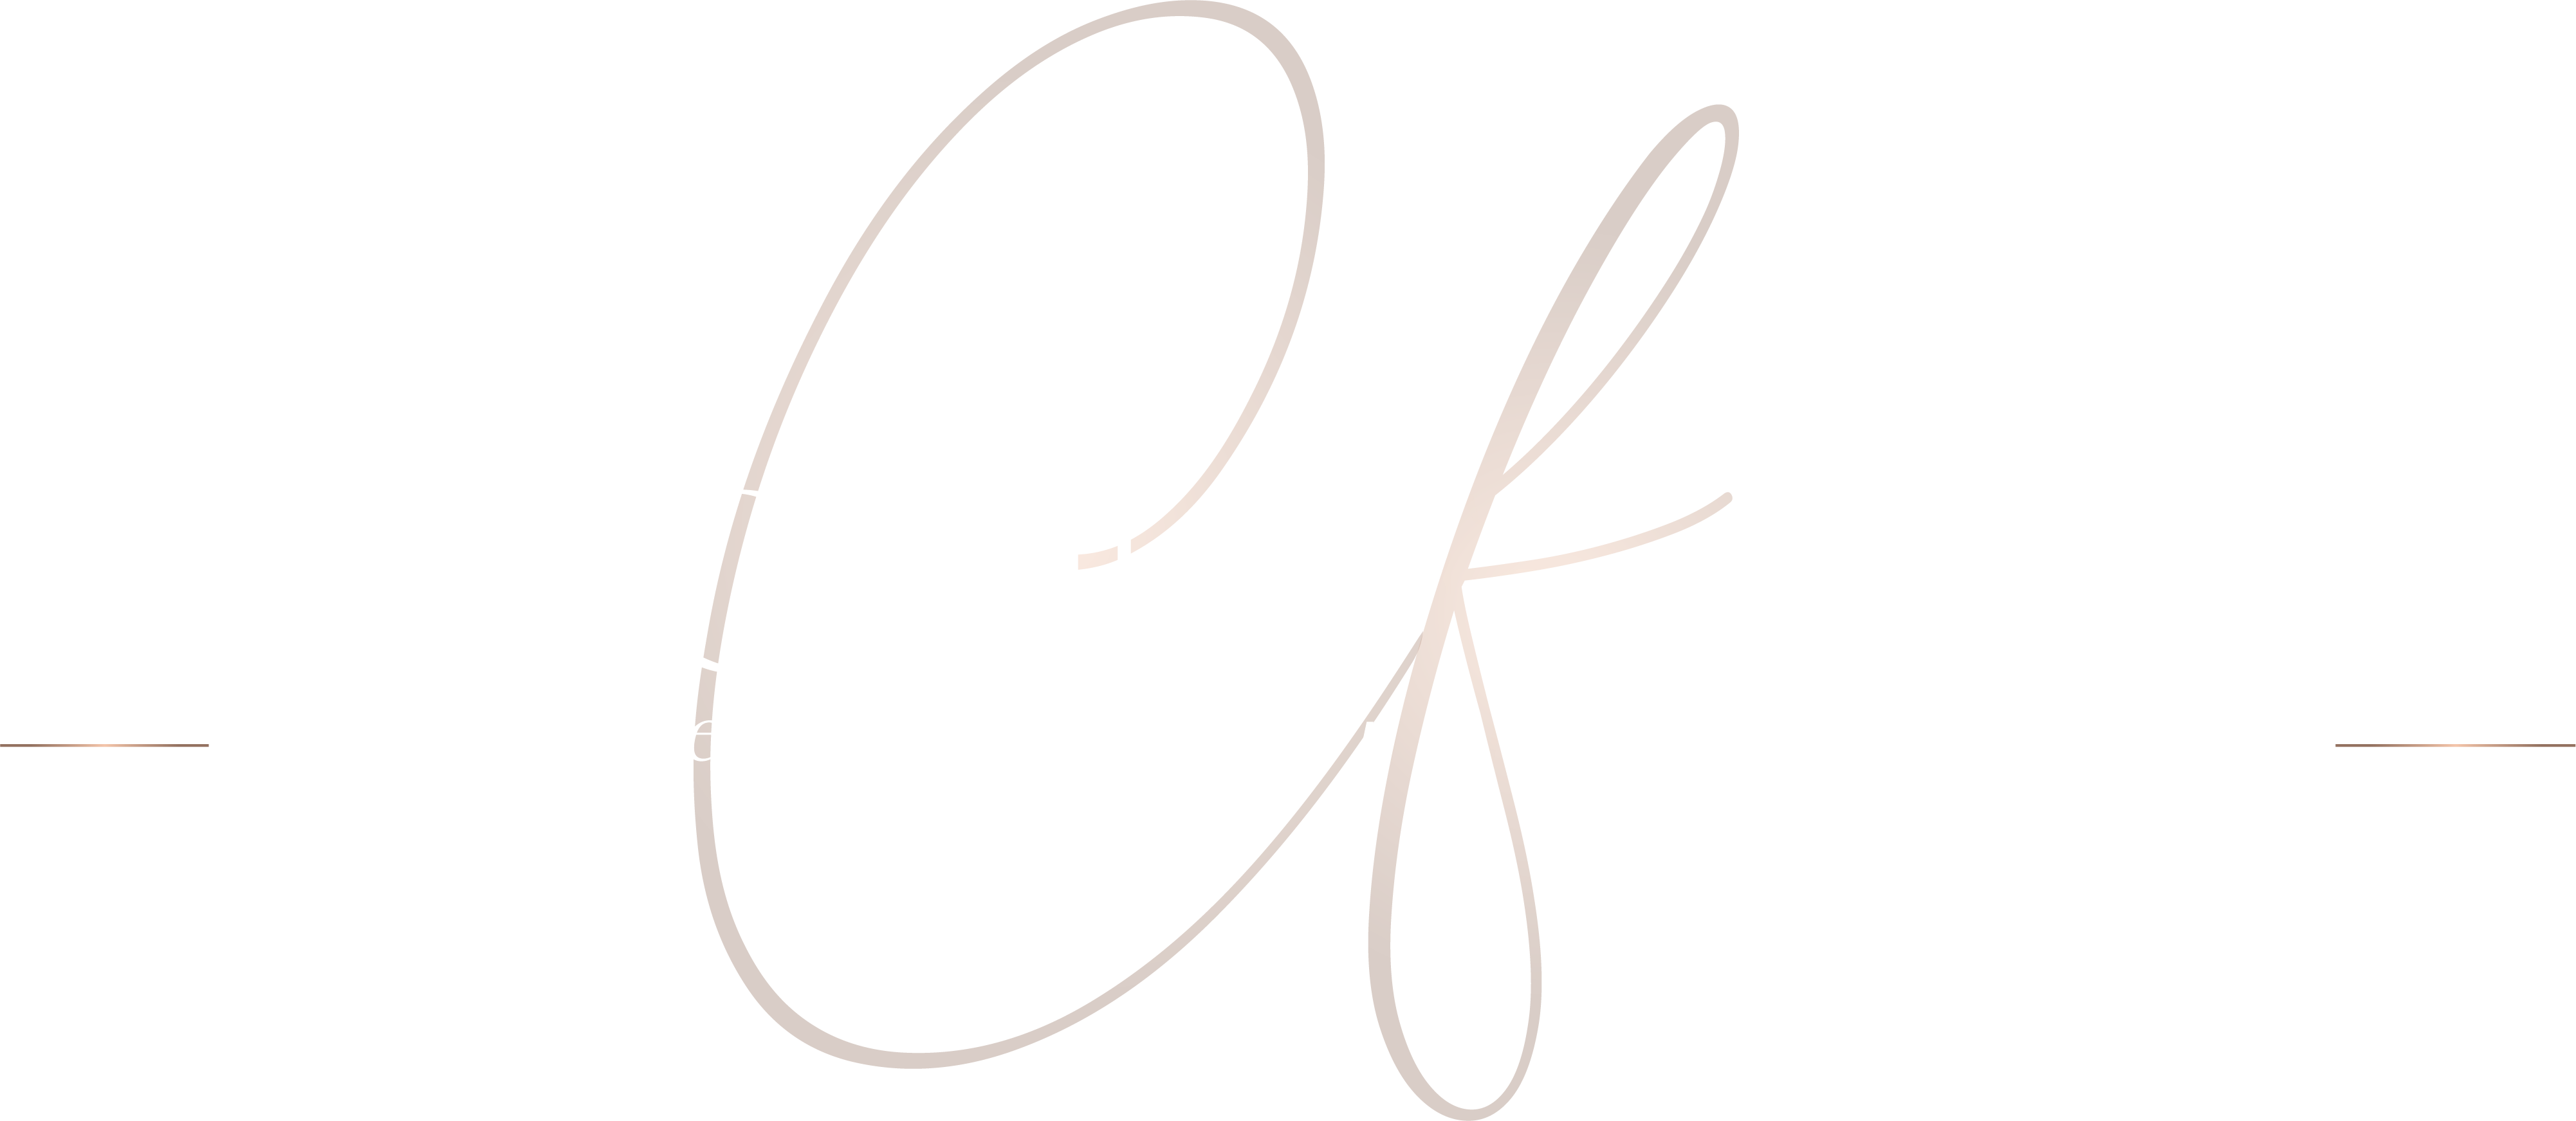 Chef-fatou-Logo